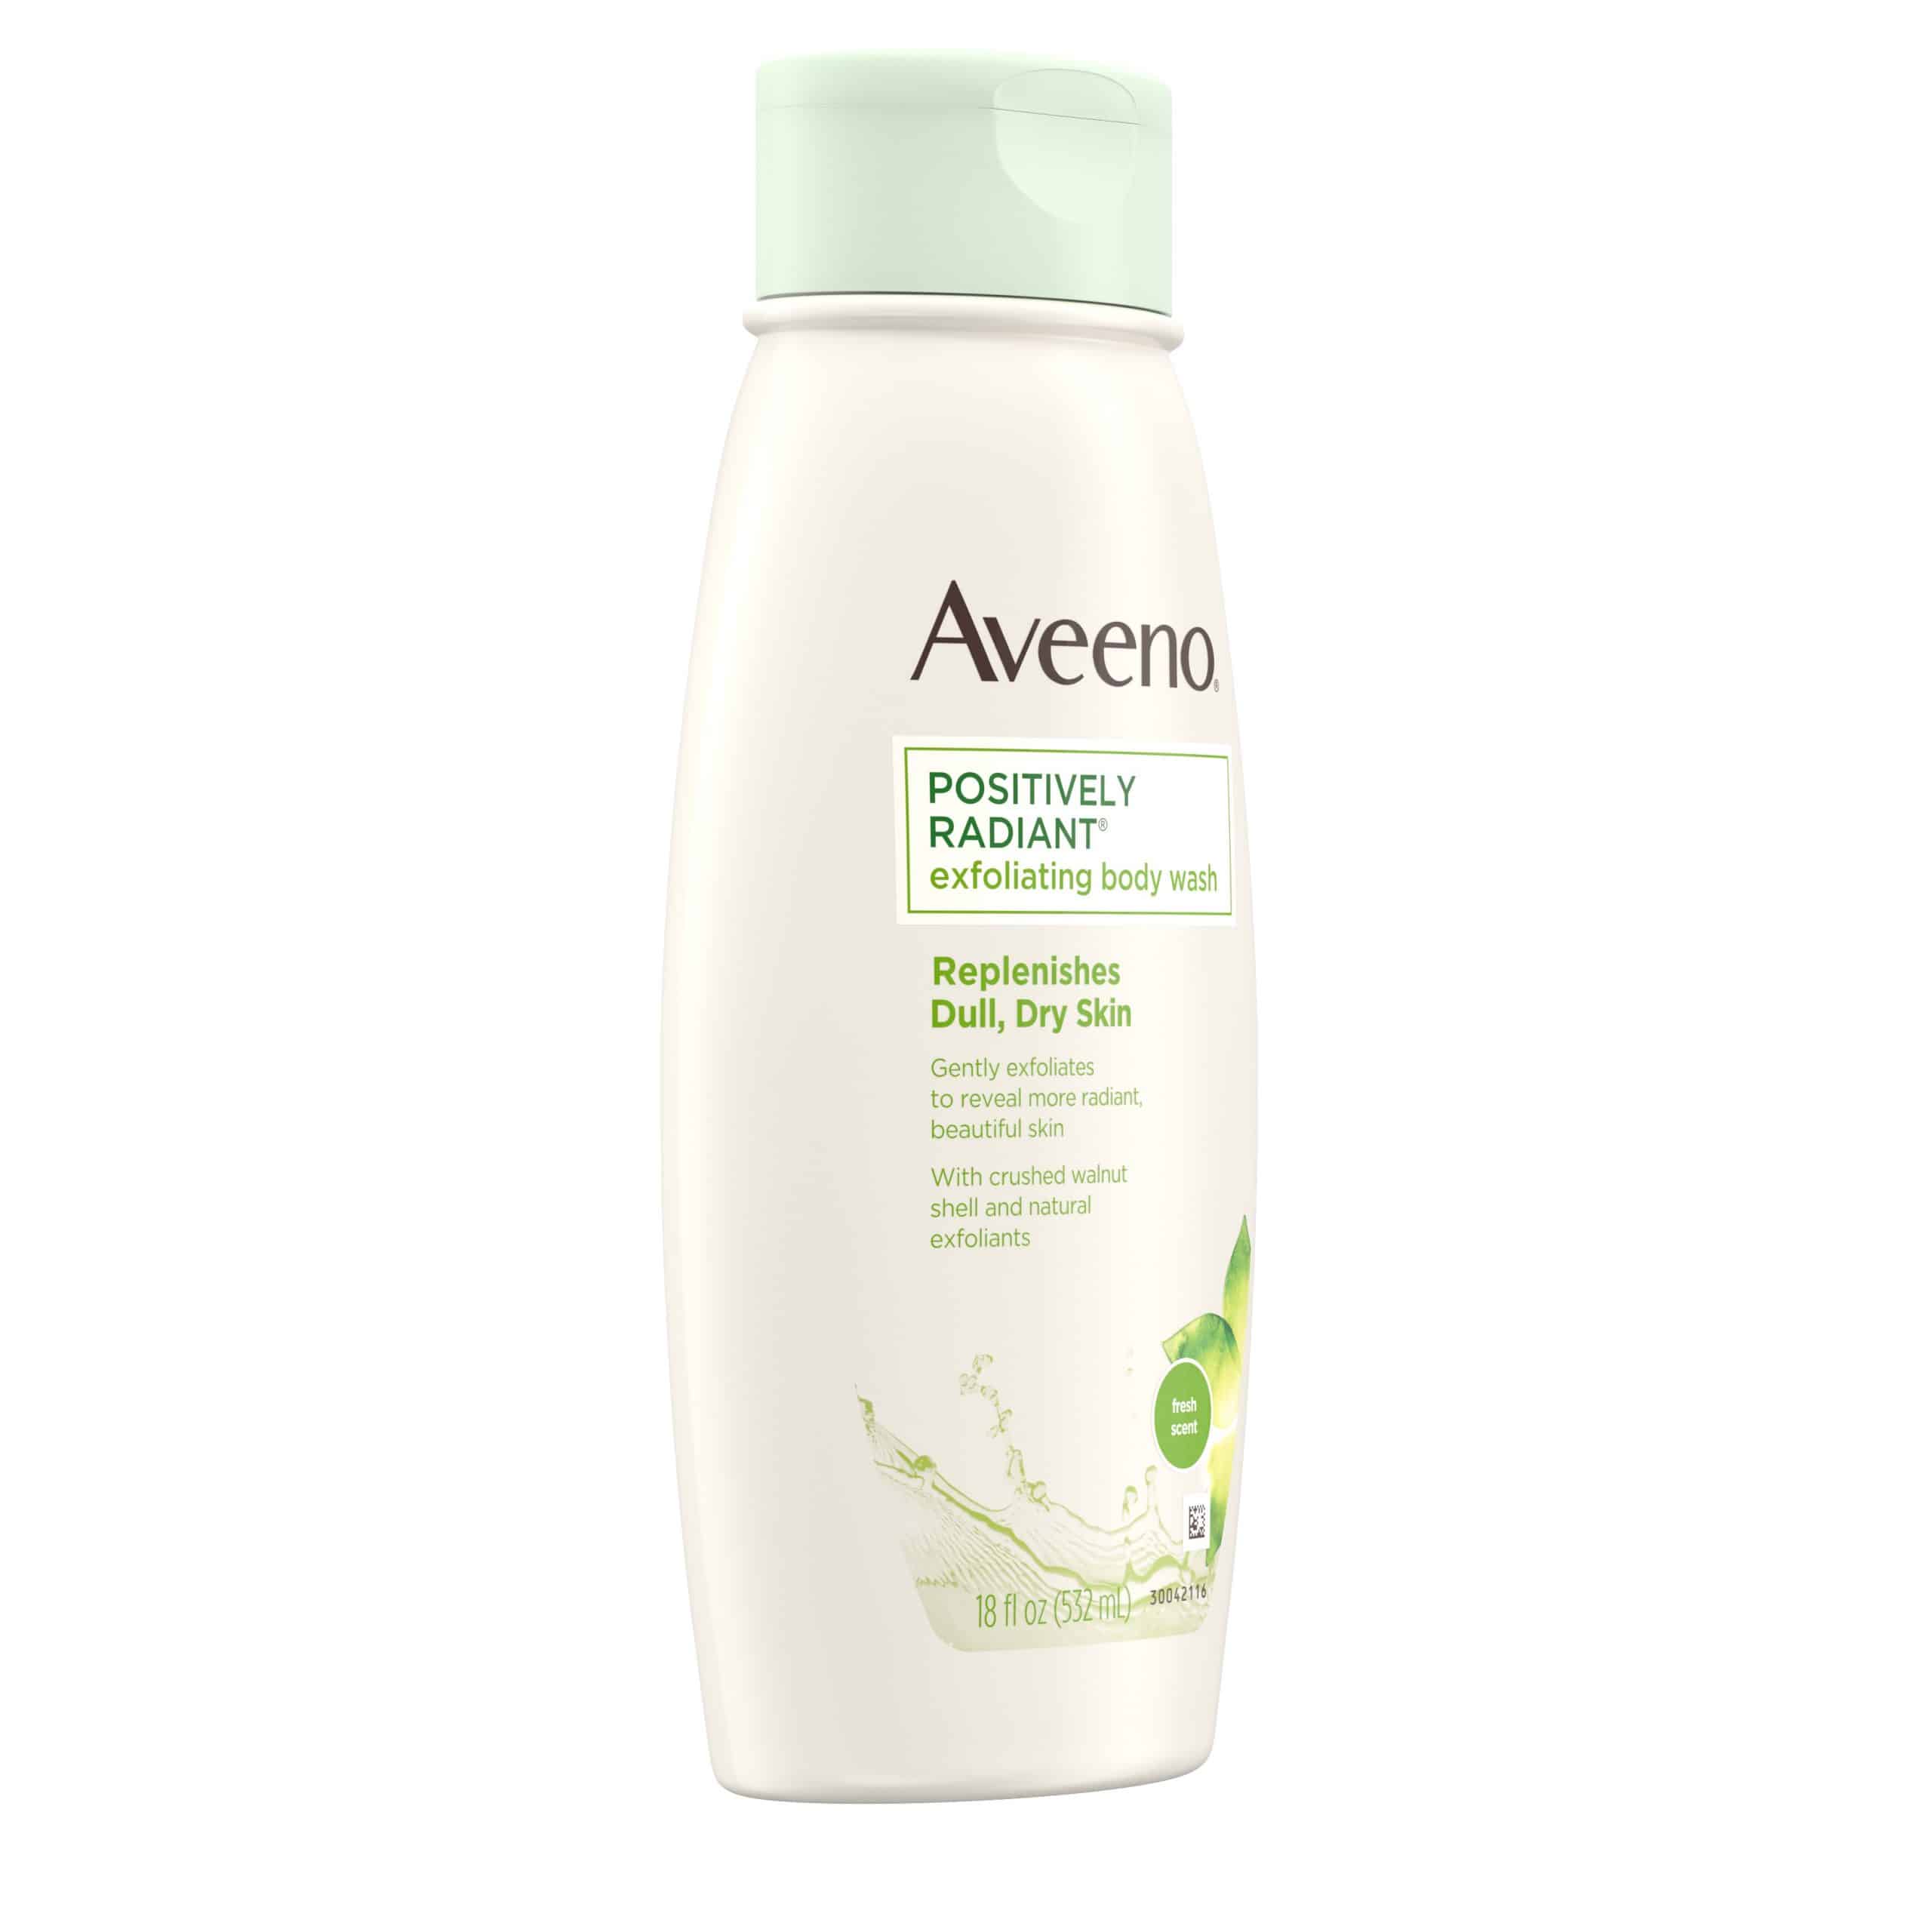 AveenoÂ® Positively Radiant Exfoliating Body Wash with Moisture